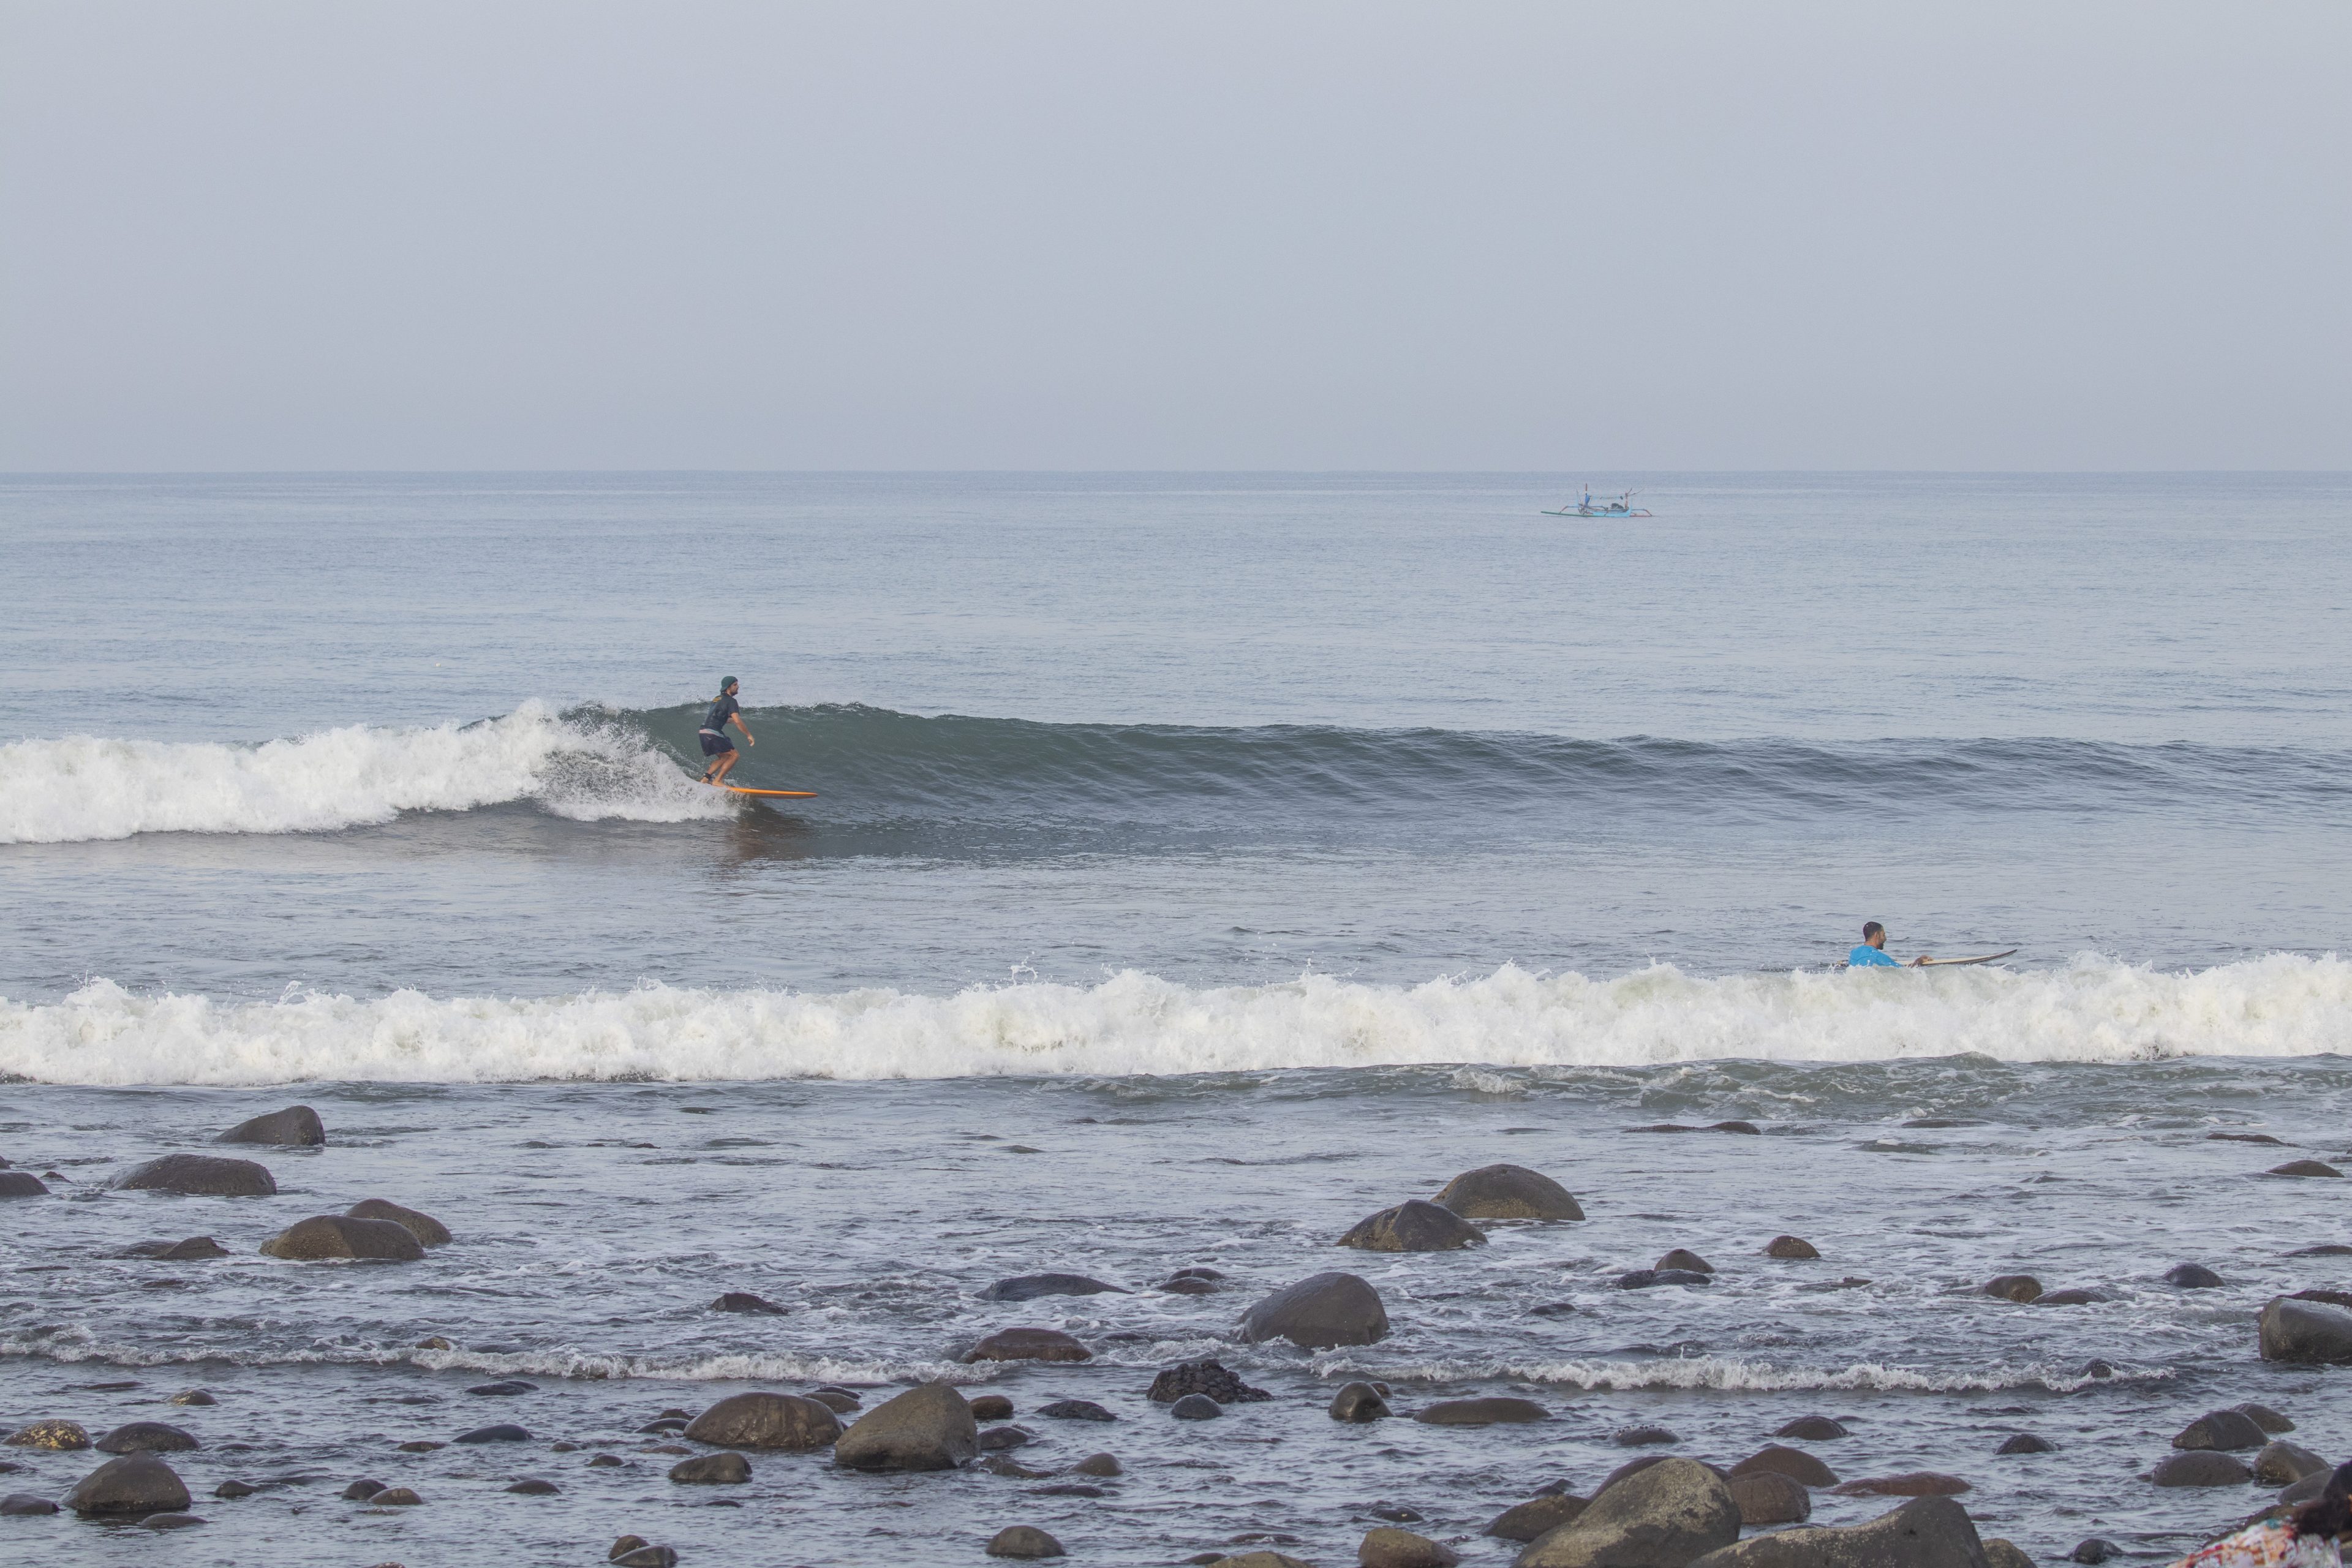 Surfer riding a wave at Medewi.